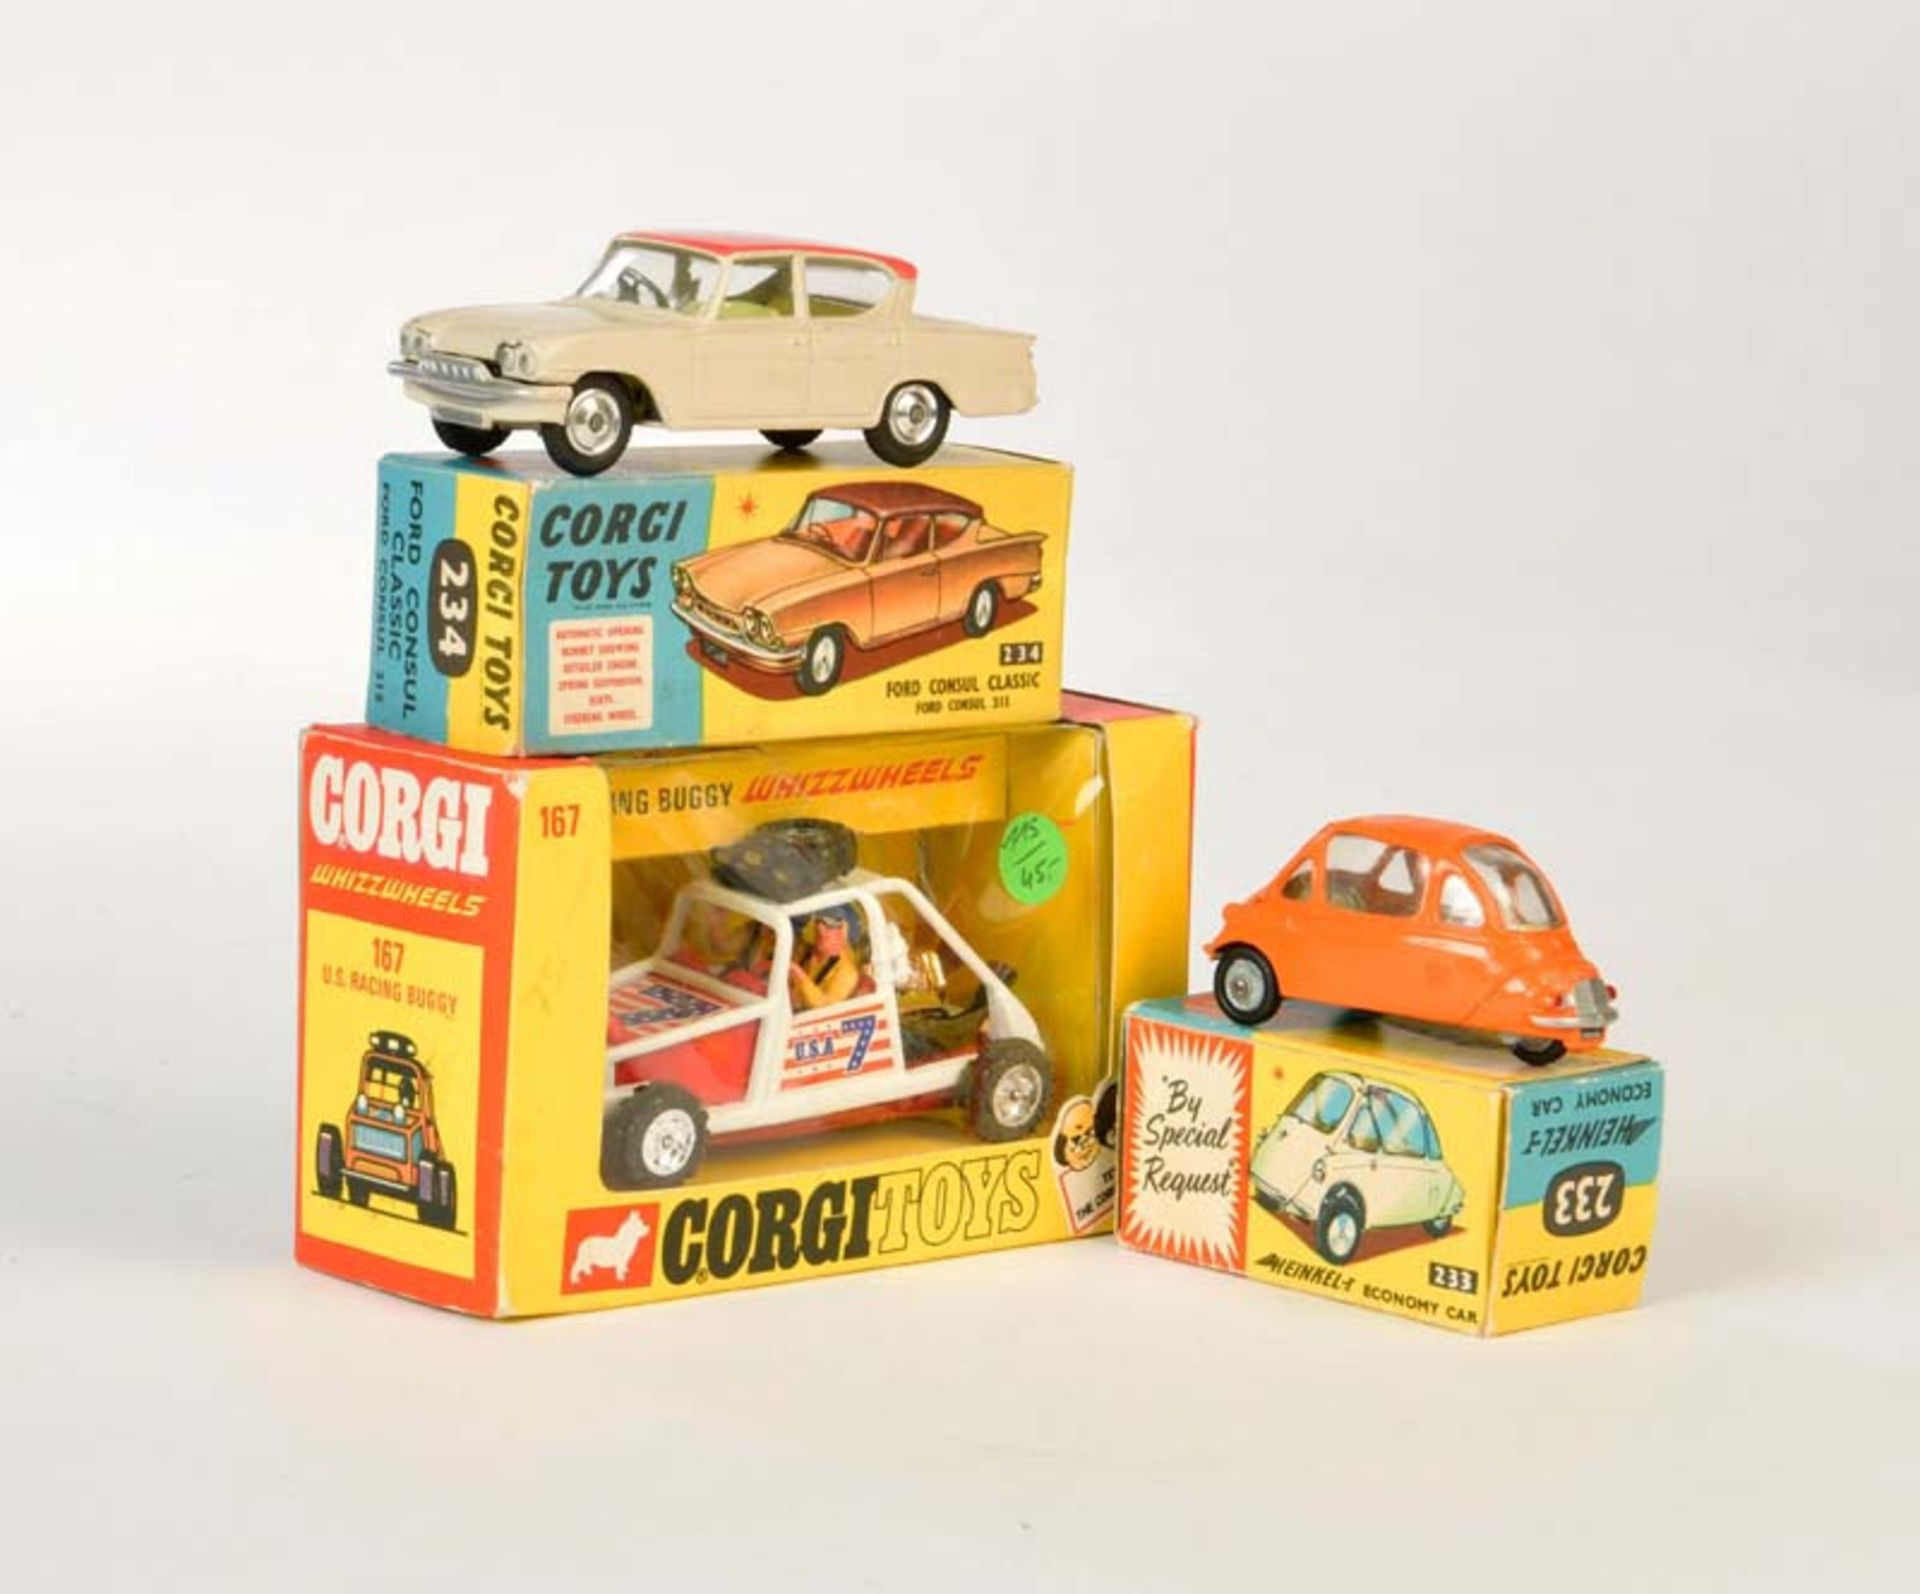 Corgi Toys, US Racing Buggy, Heinkel 1 + Ford Consul